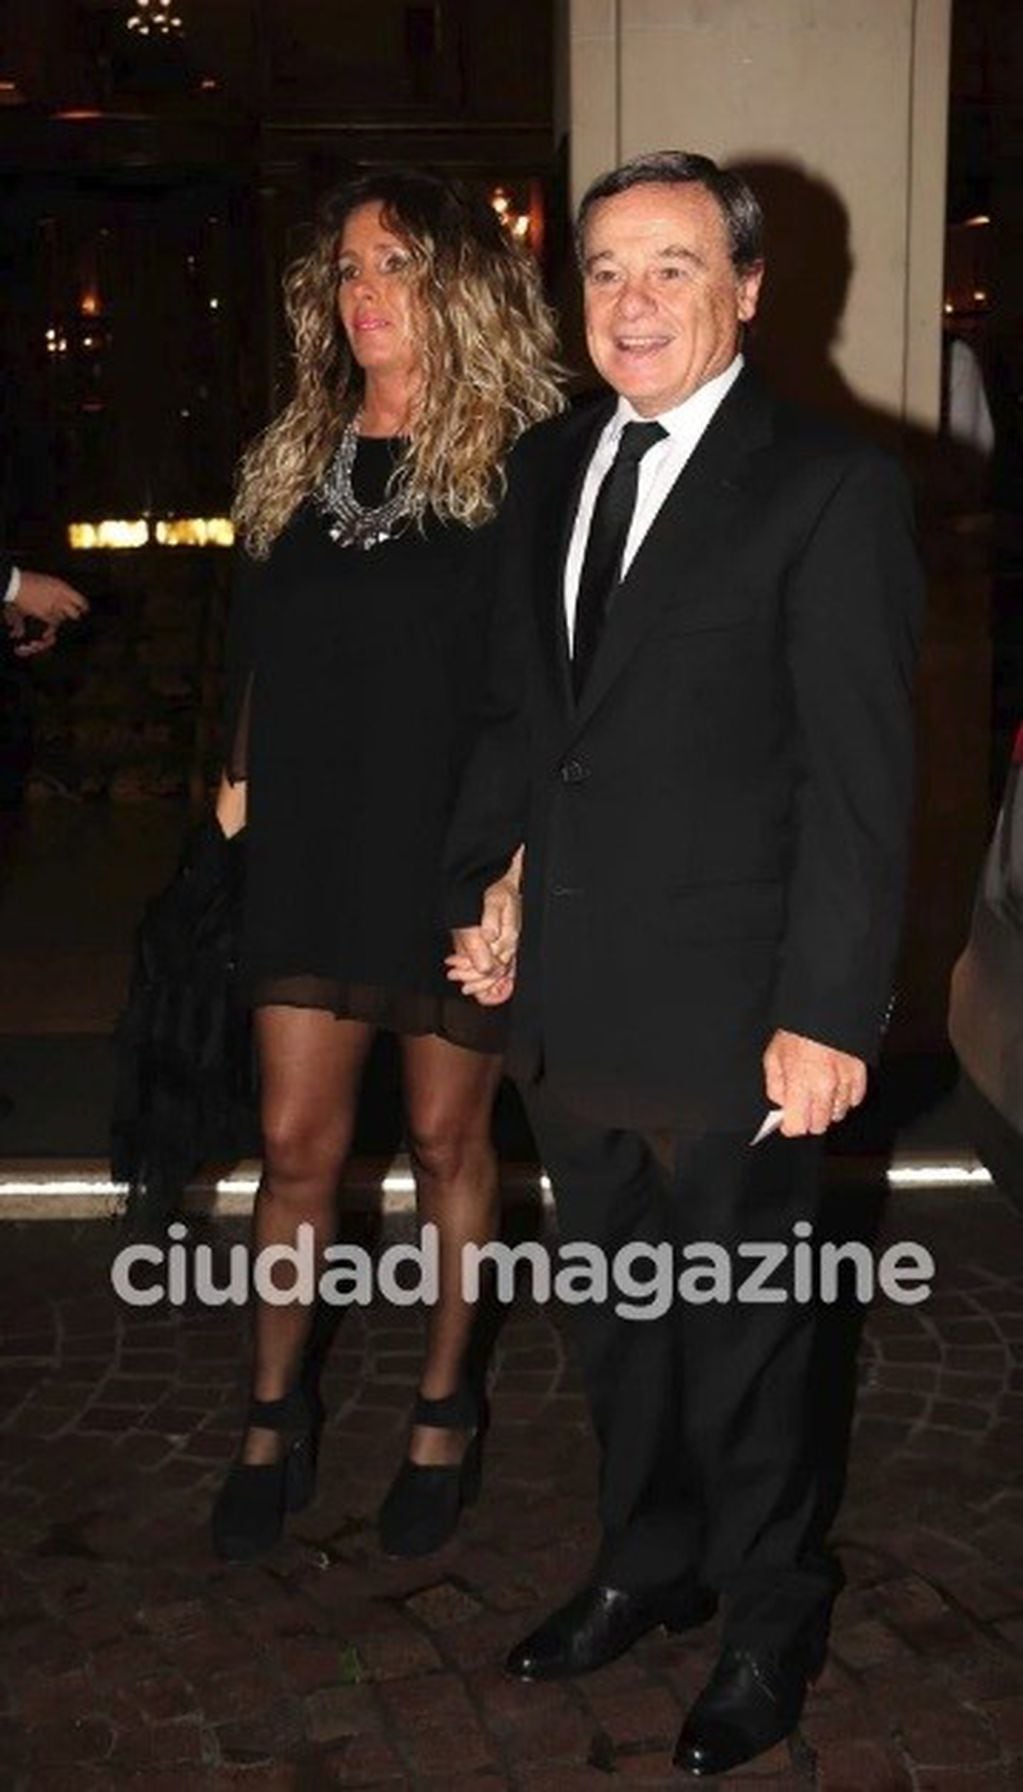 Casamiento de Guido Kaczka. (Foto: Ciudad Magazine)